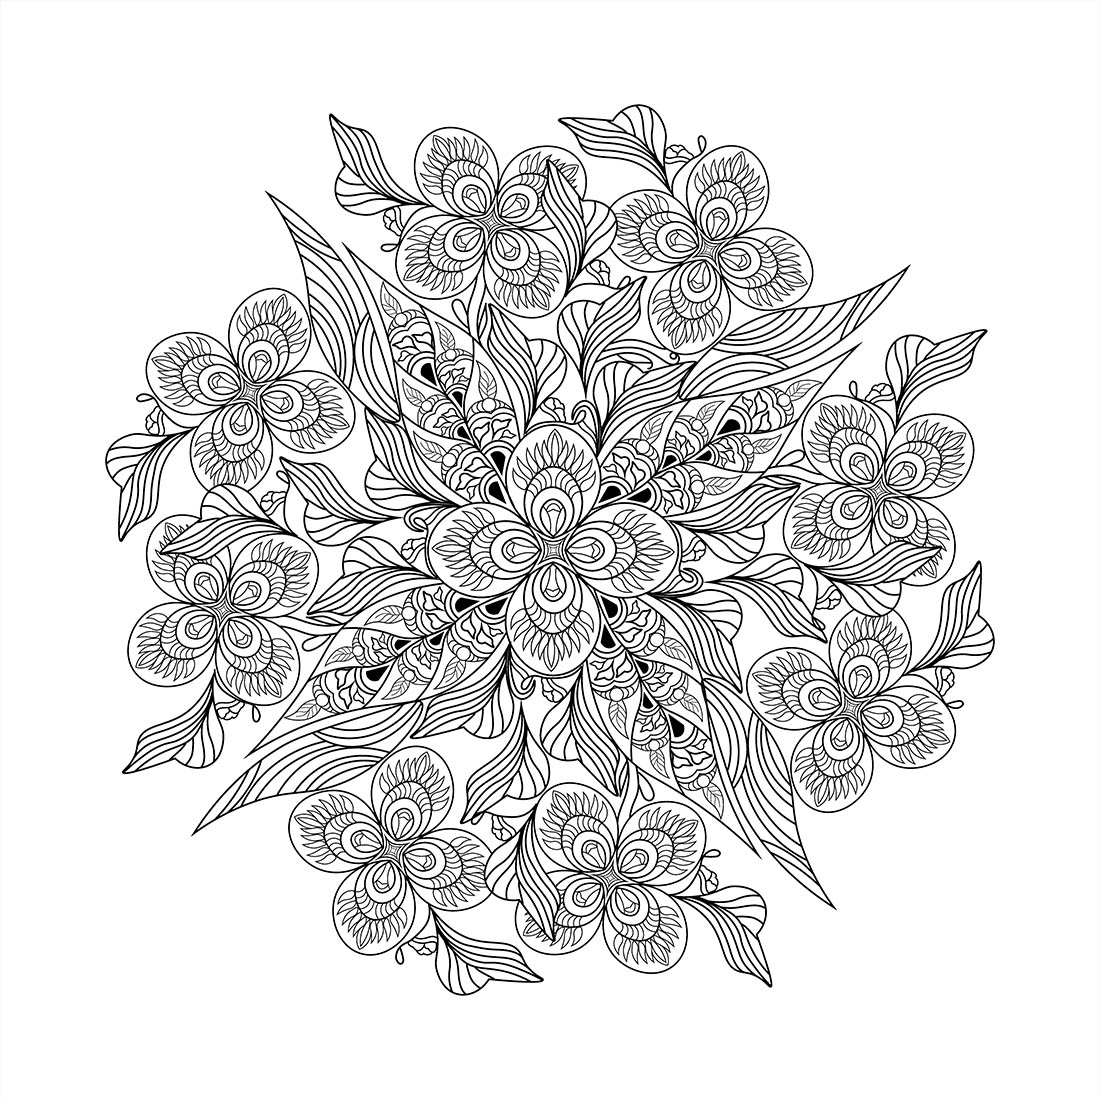 Doodle flower art, doodle flower art drawing, doodle flower drawing, flower drawing doodle art zentangle art, doodle flower coloring pages cover image.